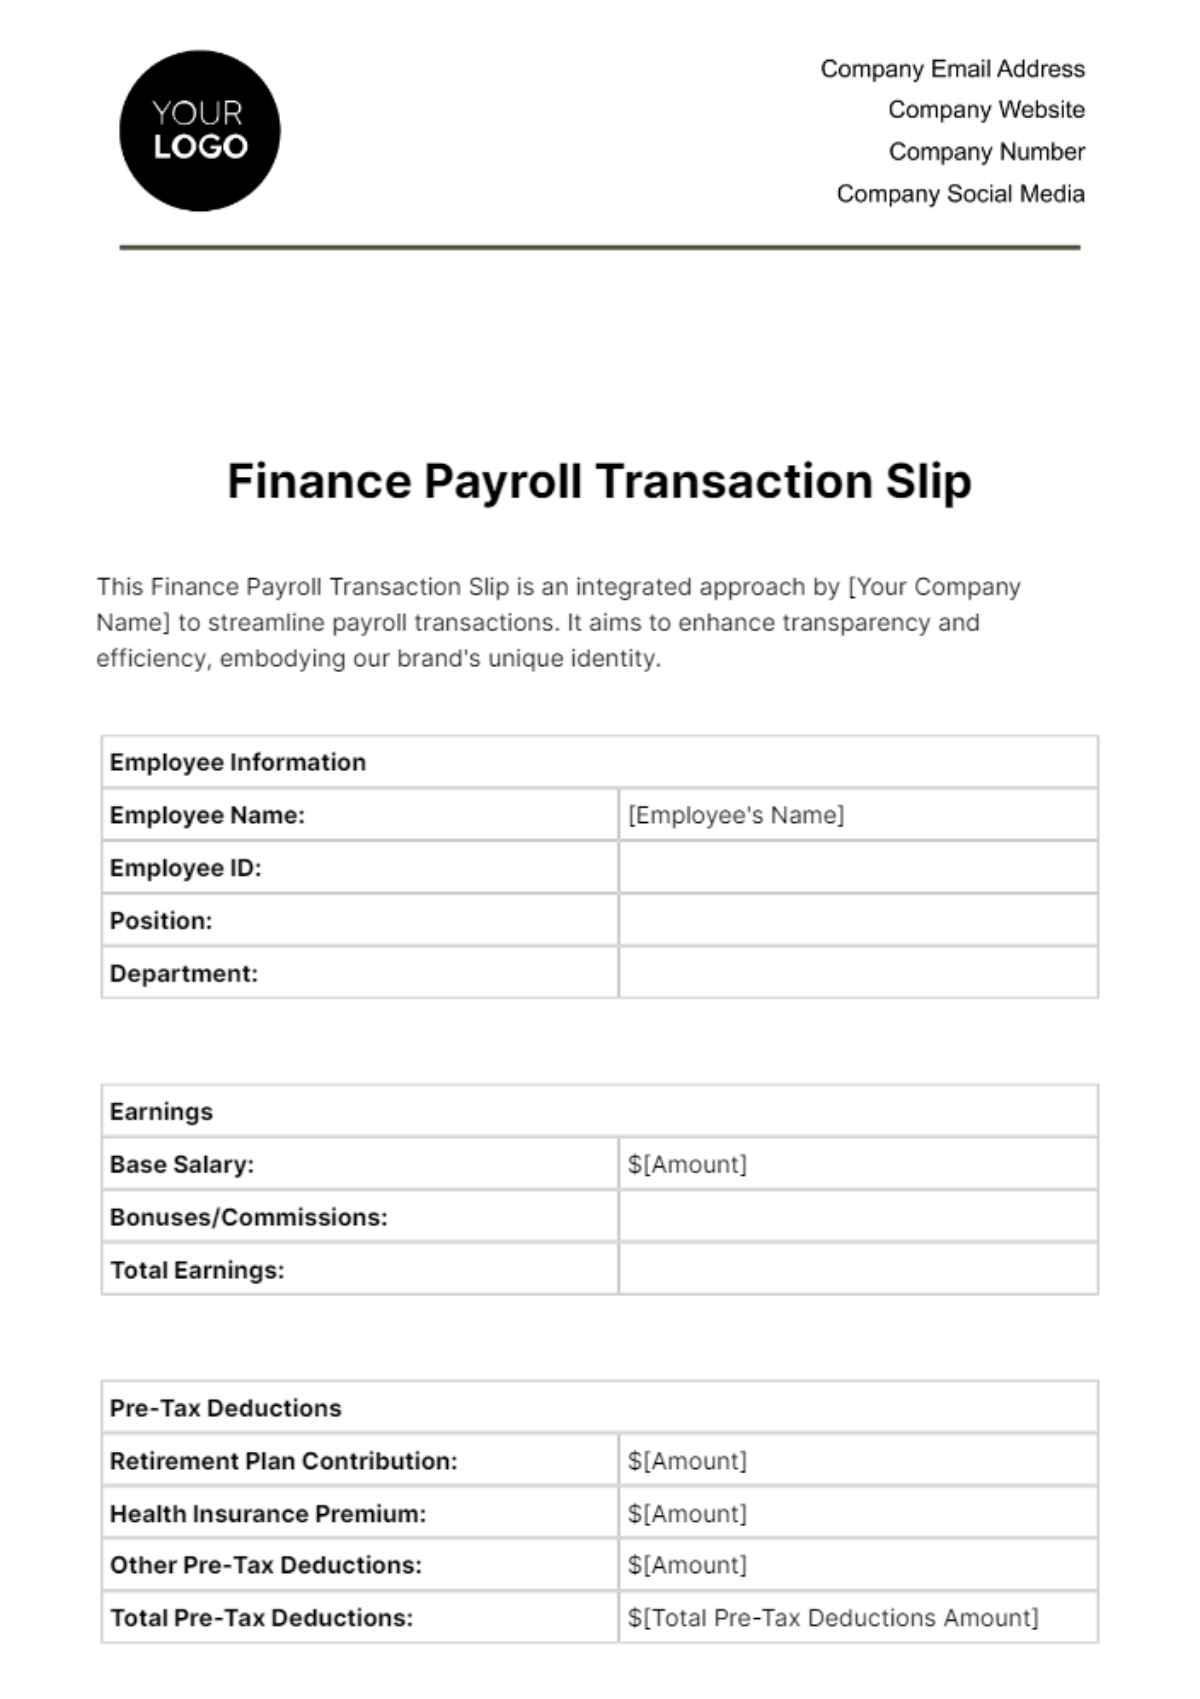 Finance Payroll Transaction Slip Template